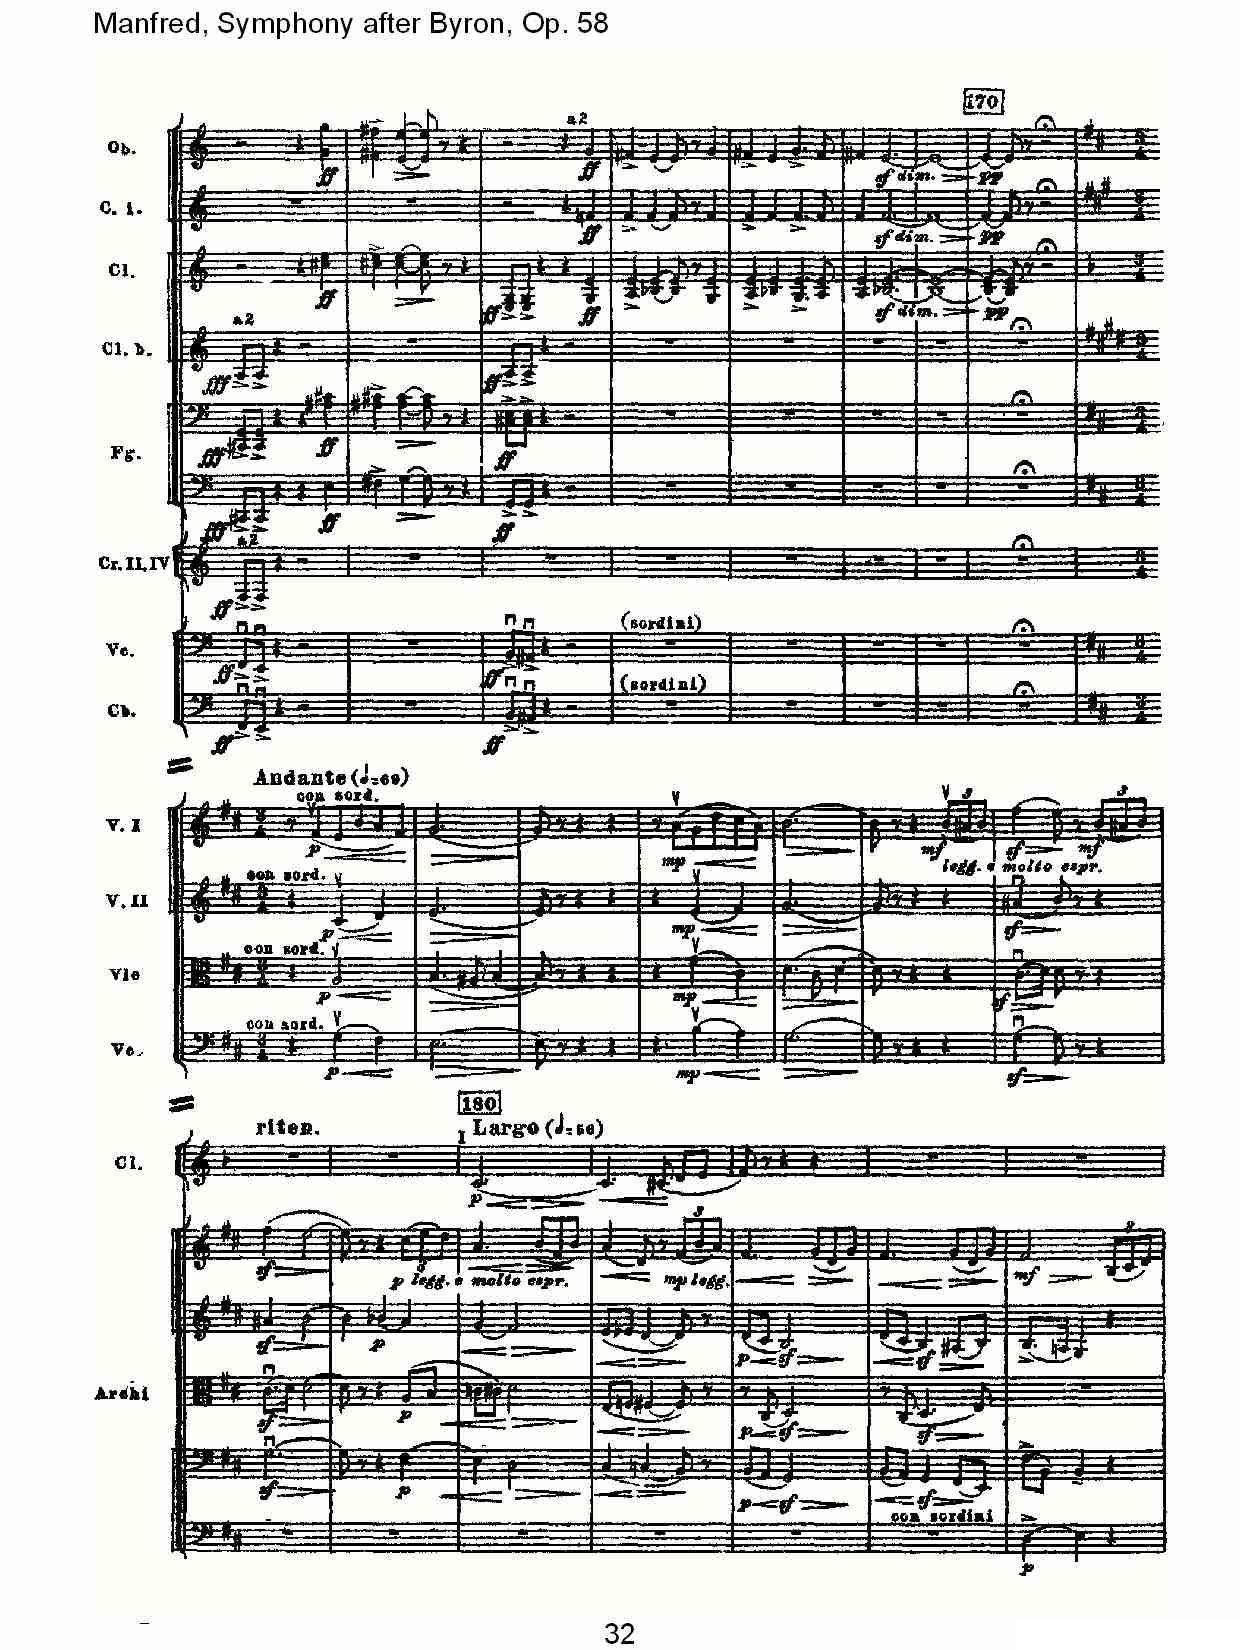 Manfred, Symphony after Byron, Op.58第一乐章（一）其它曲谱（图32）